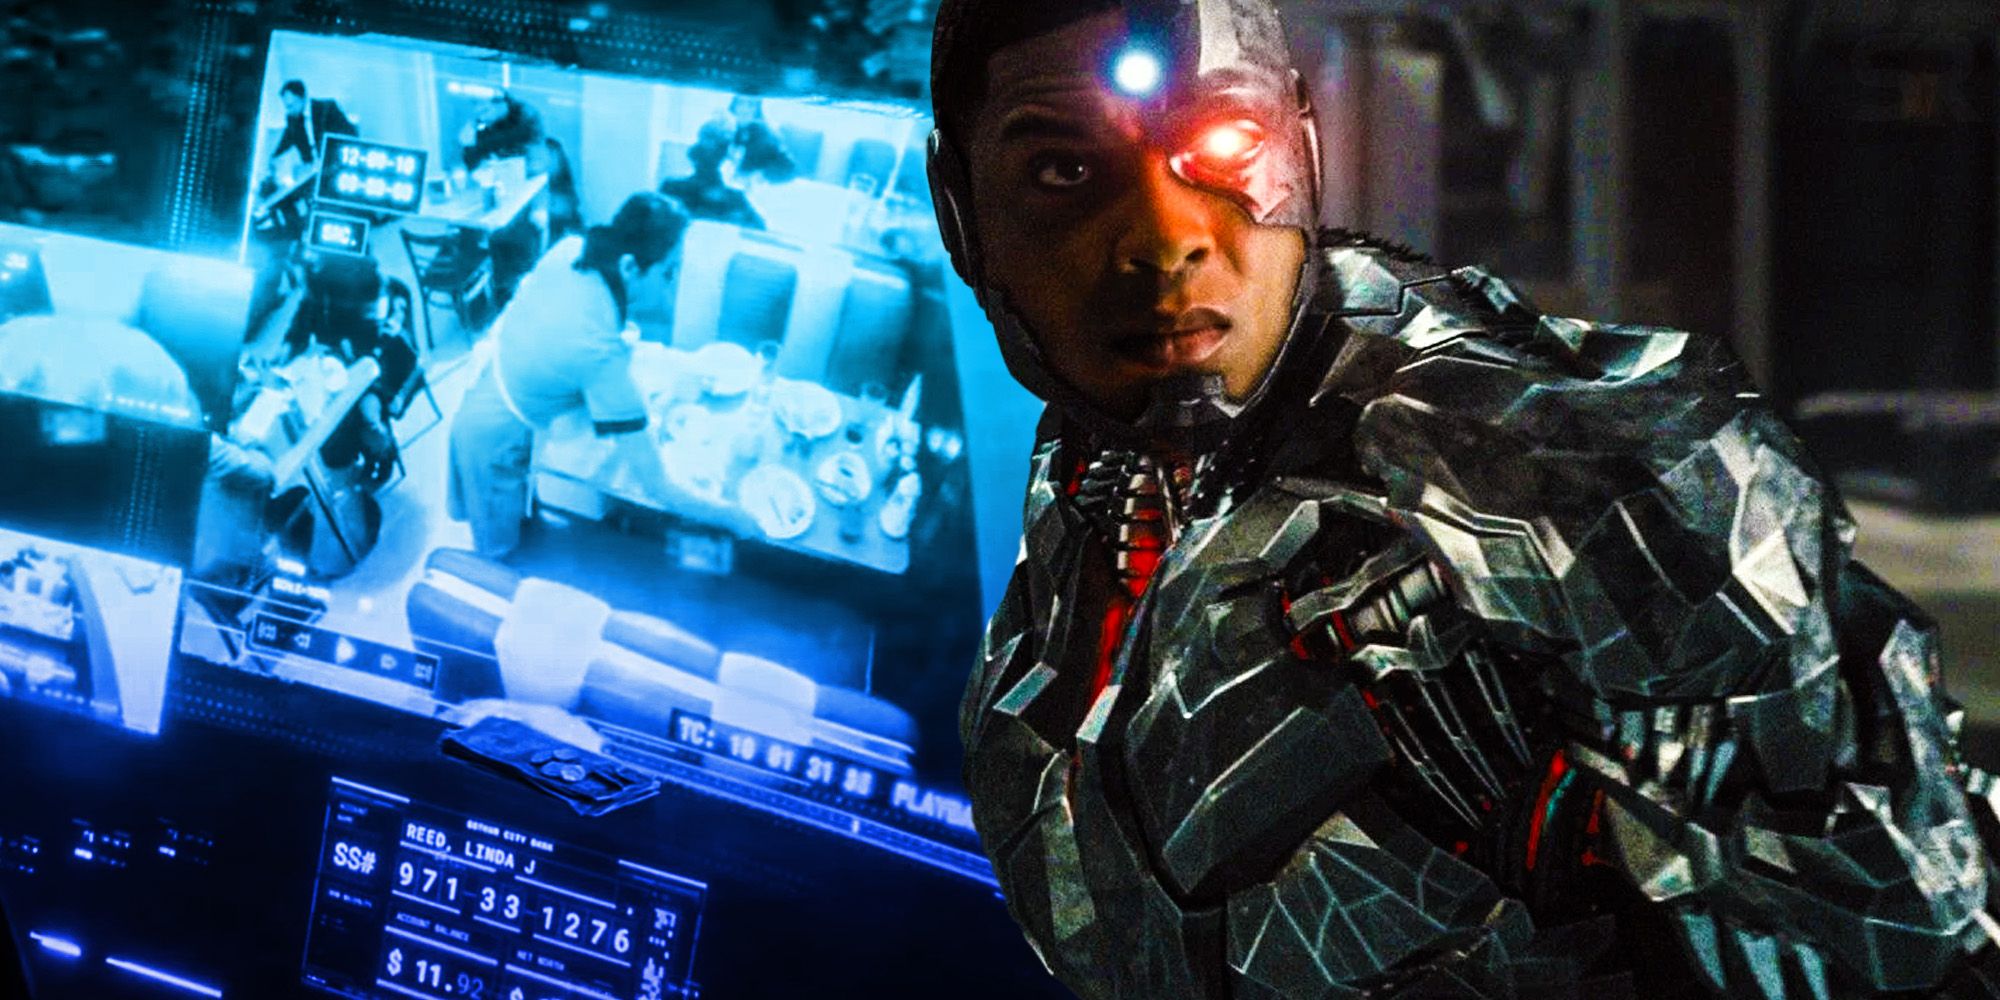 Cyborg Justice League Snyder Cut